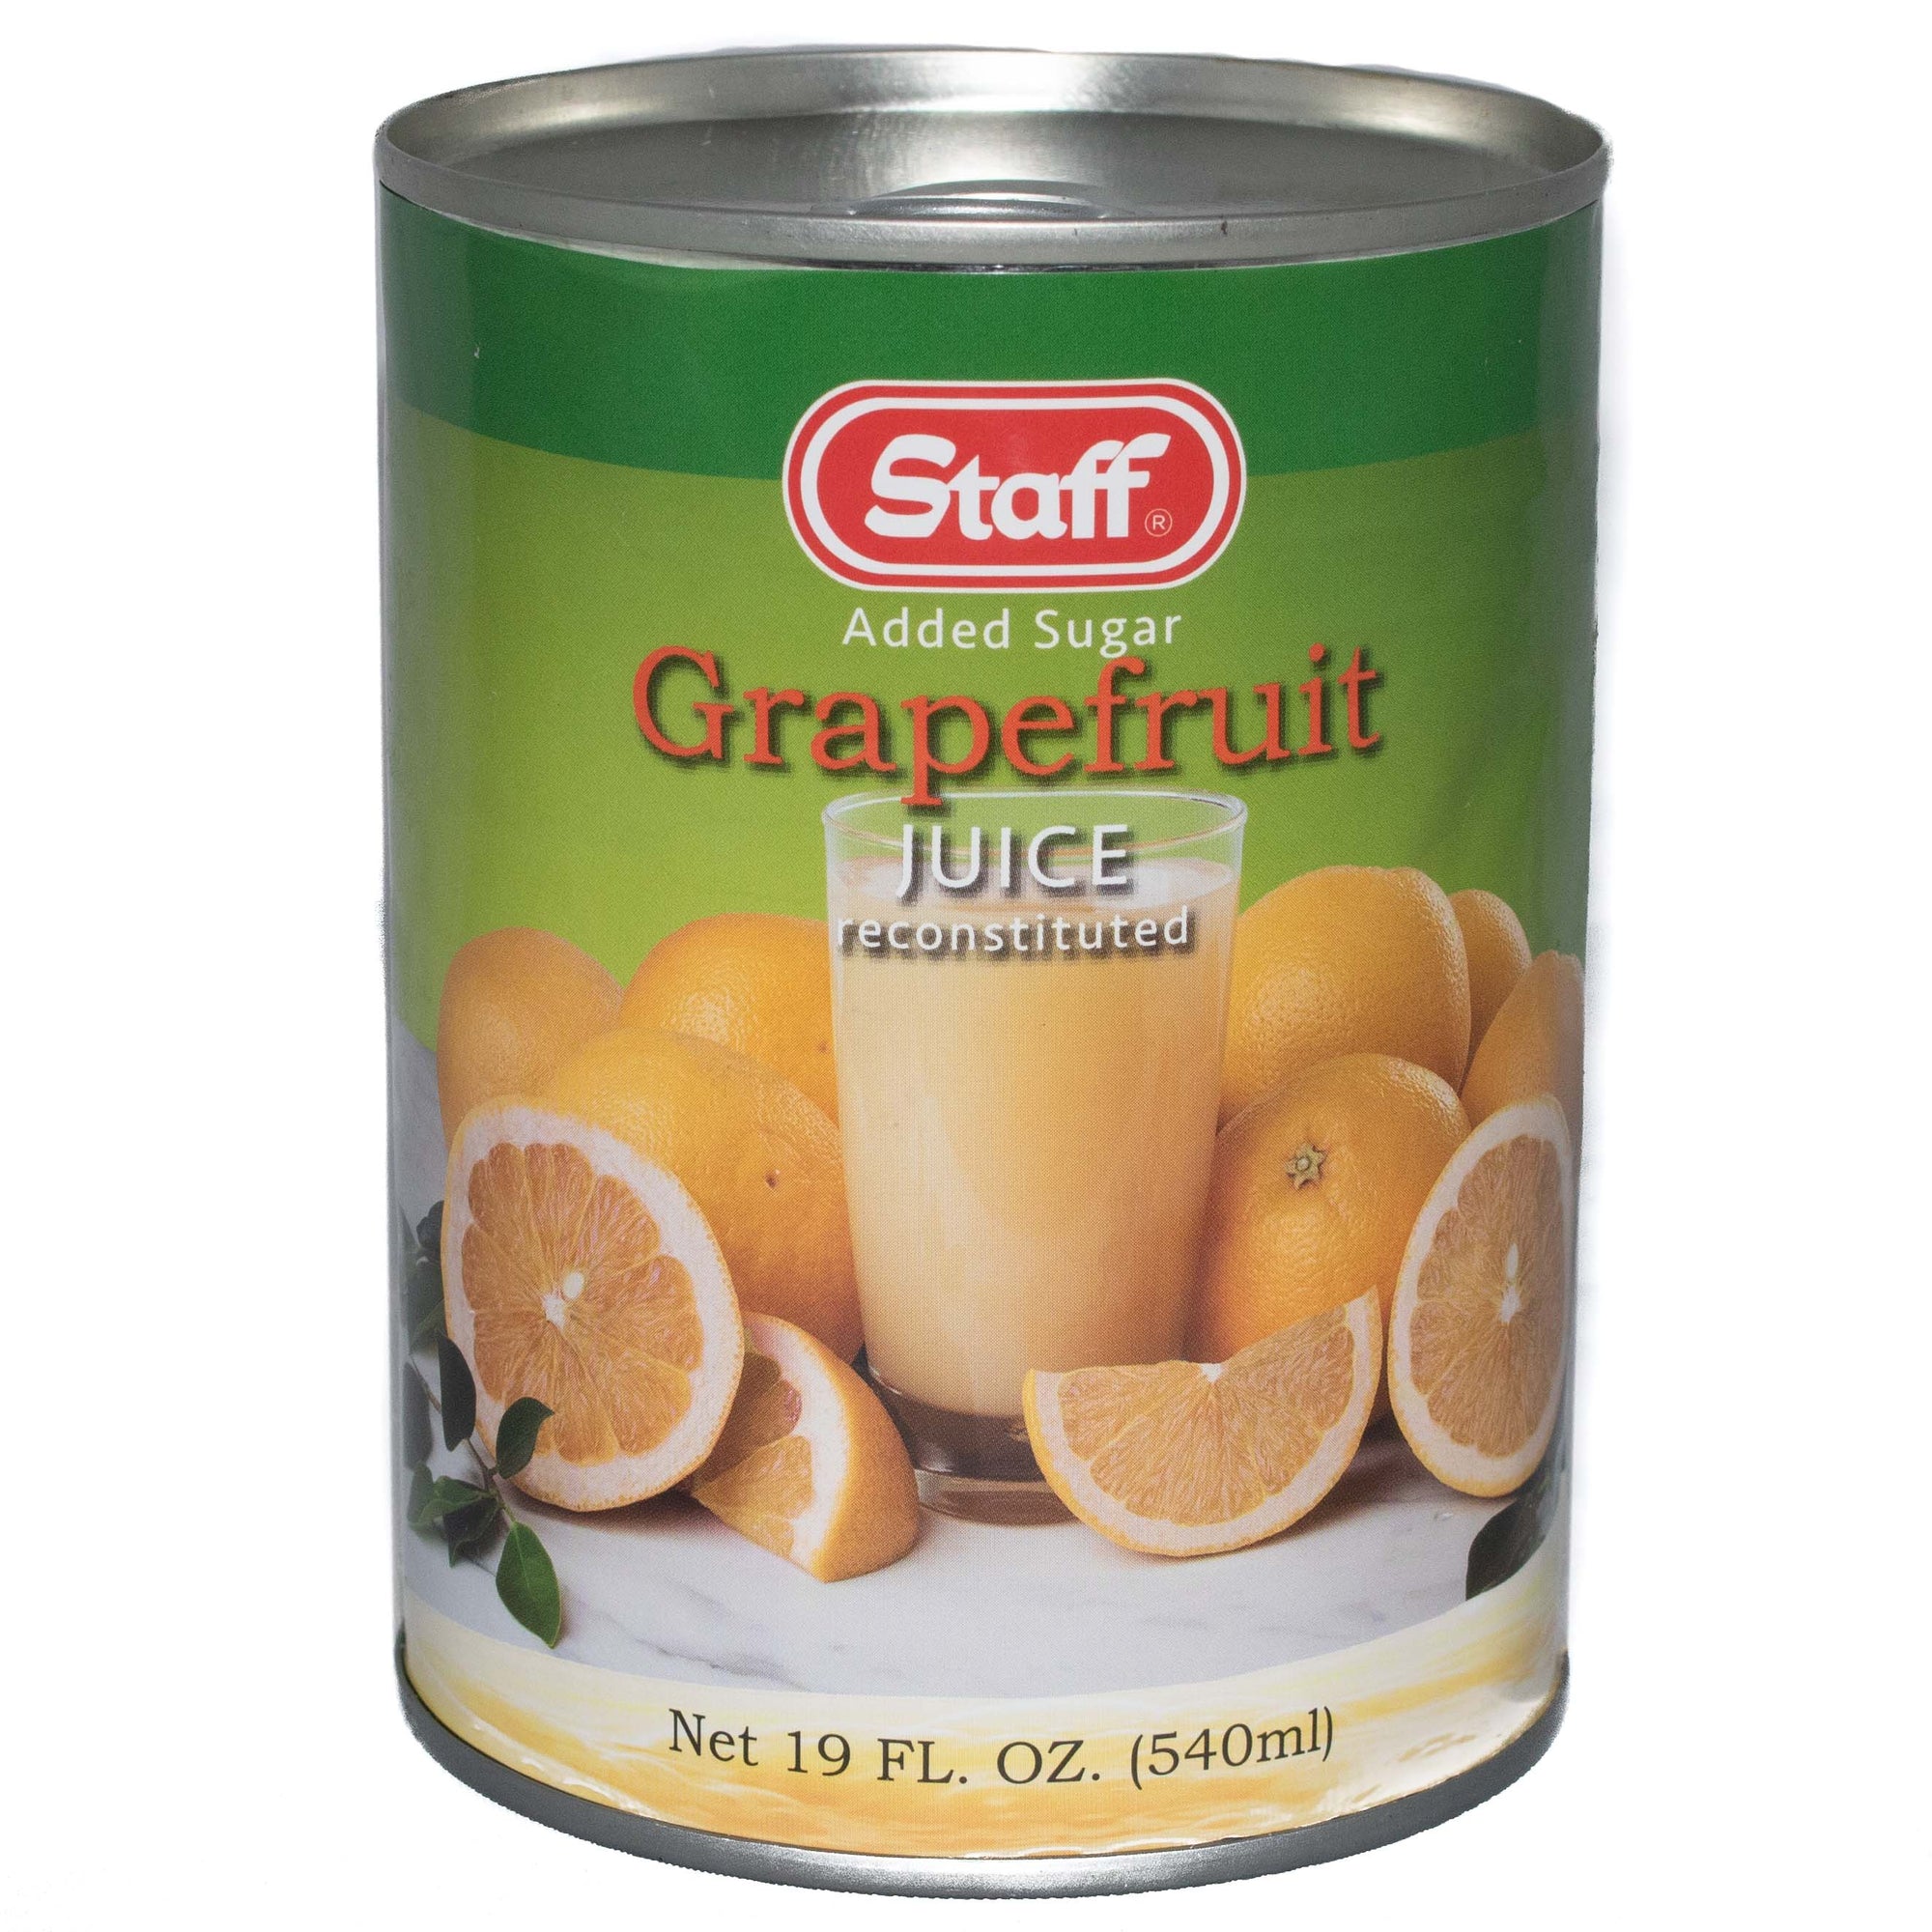 STAFF Grapefruit Juice 19 oz